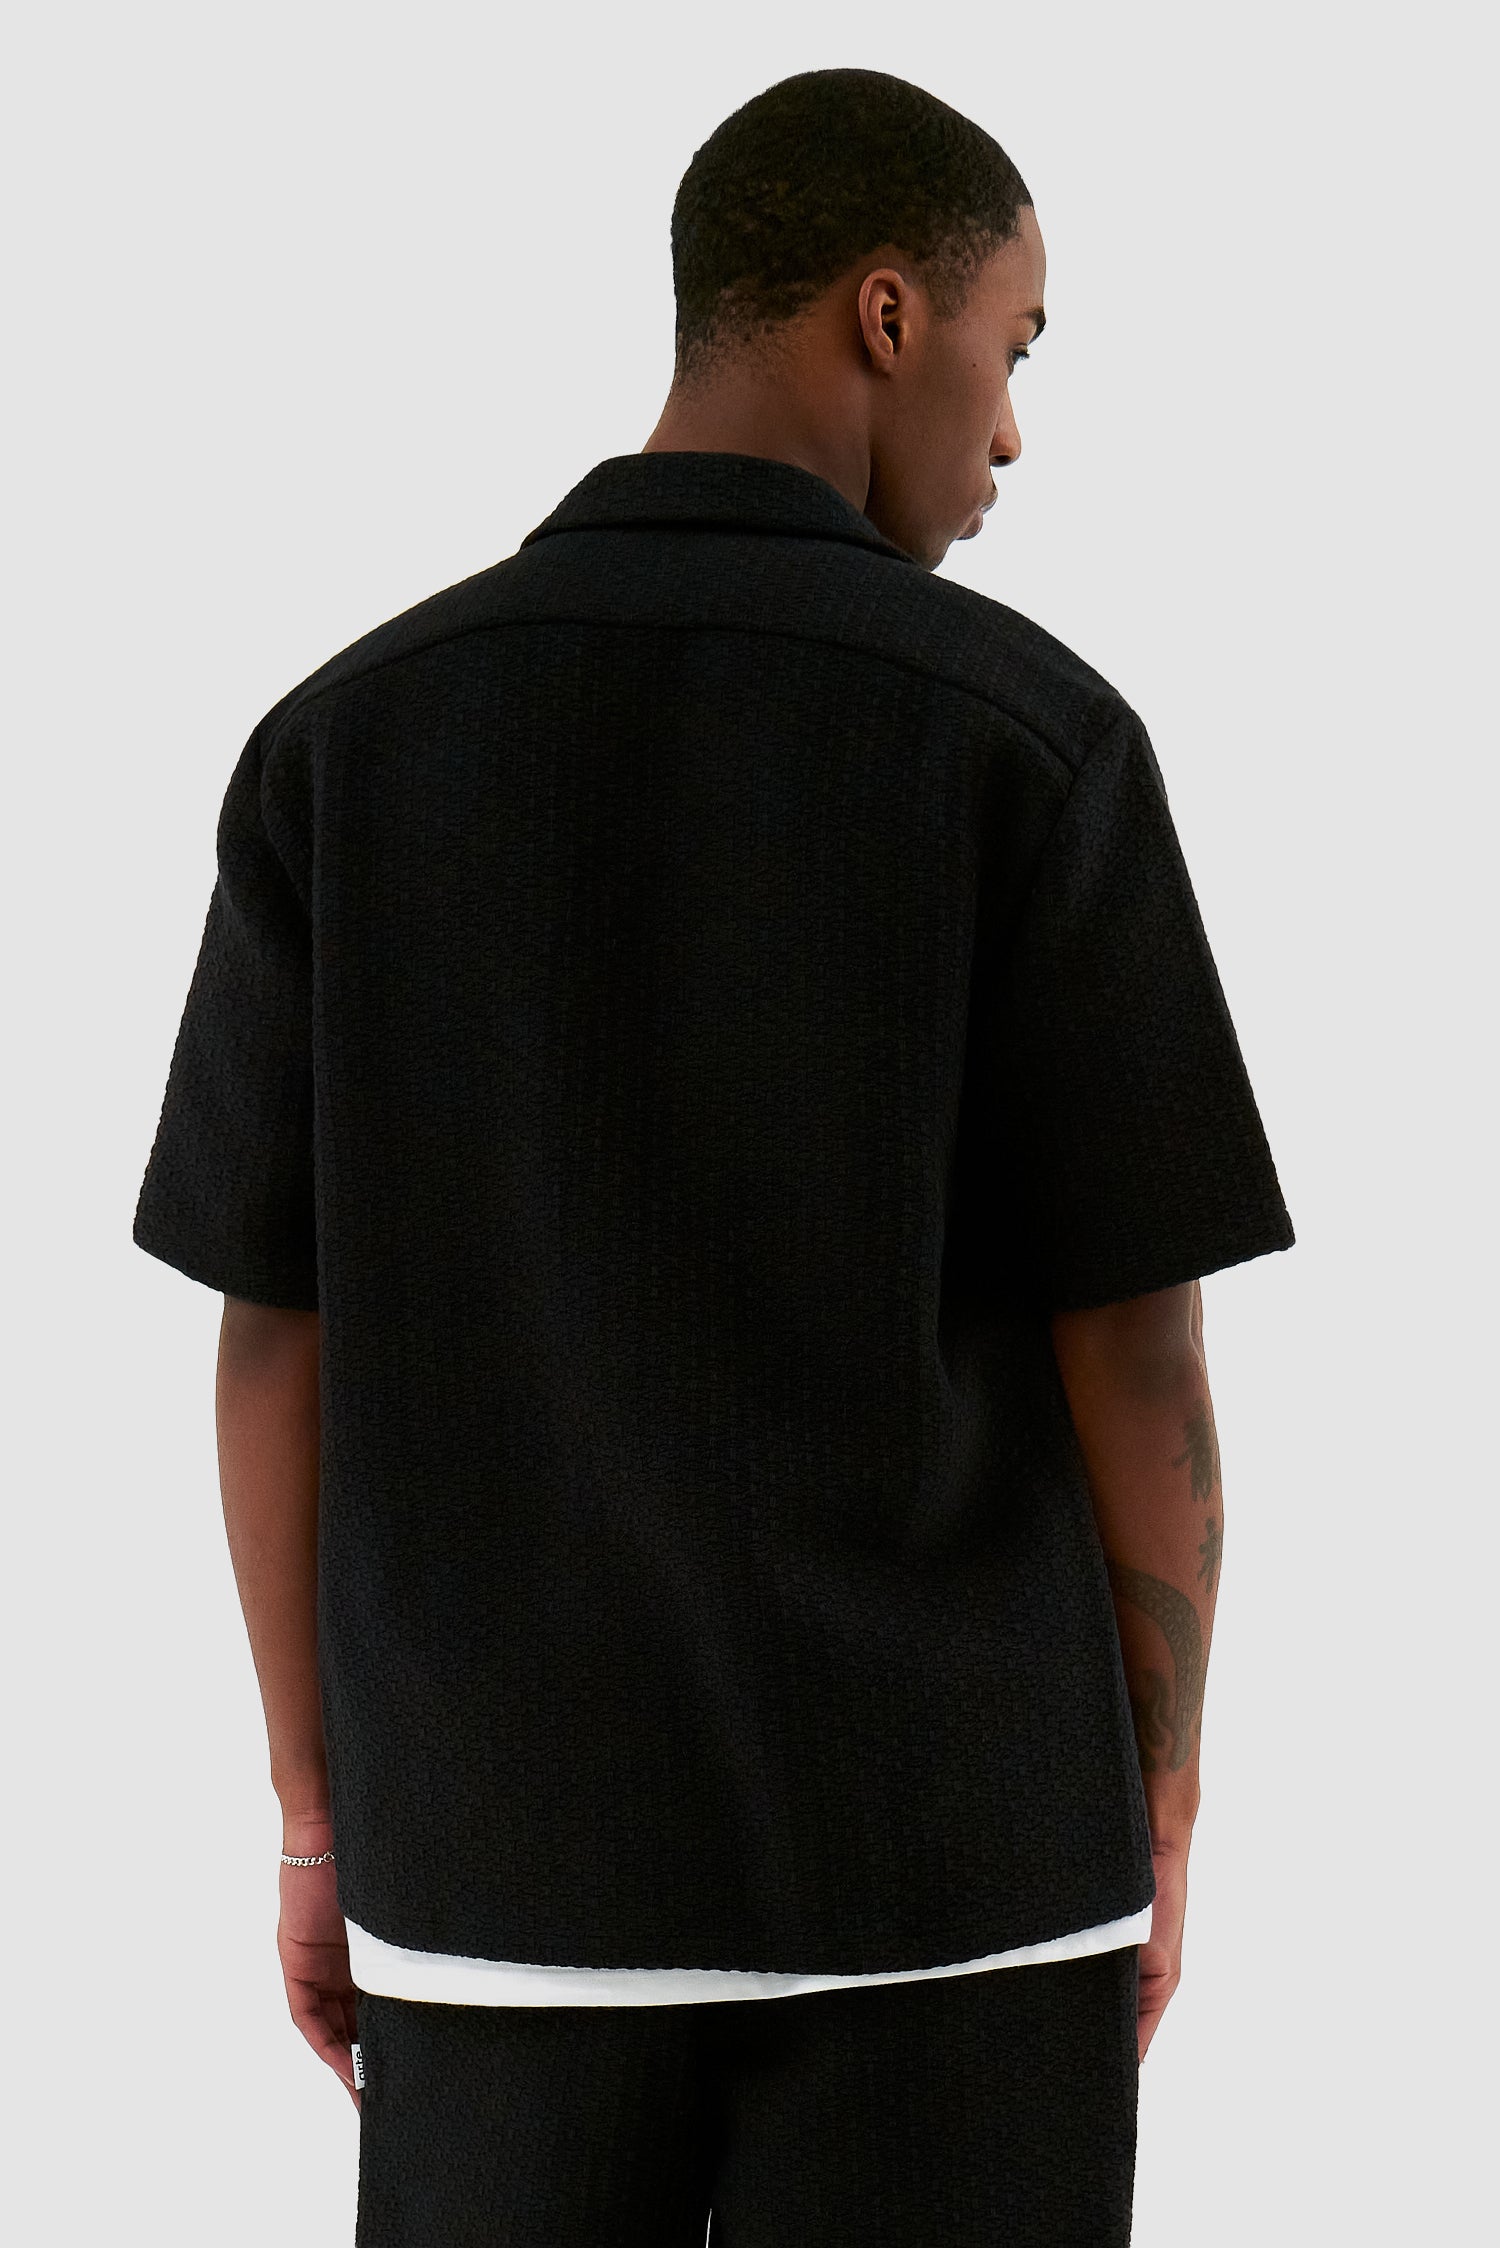 Smith Shirt - Black